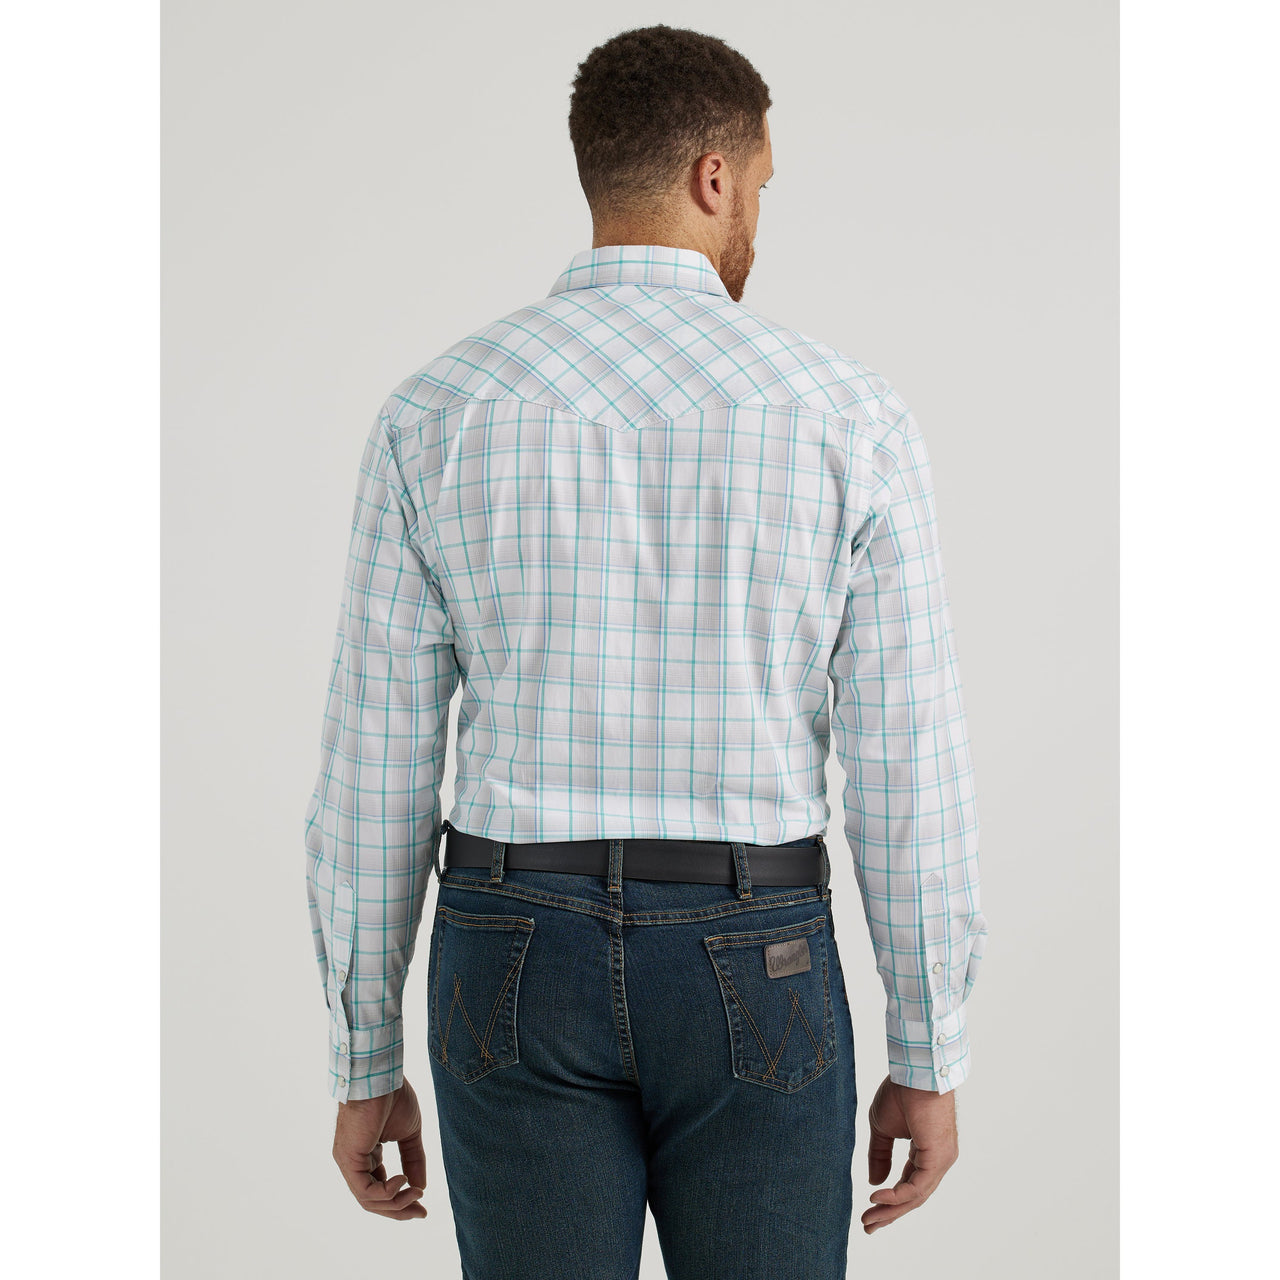 Wrangler Men's 20X Advanced Comfort Long Sleeve Classic Fit Snap Shirt - White